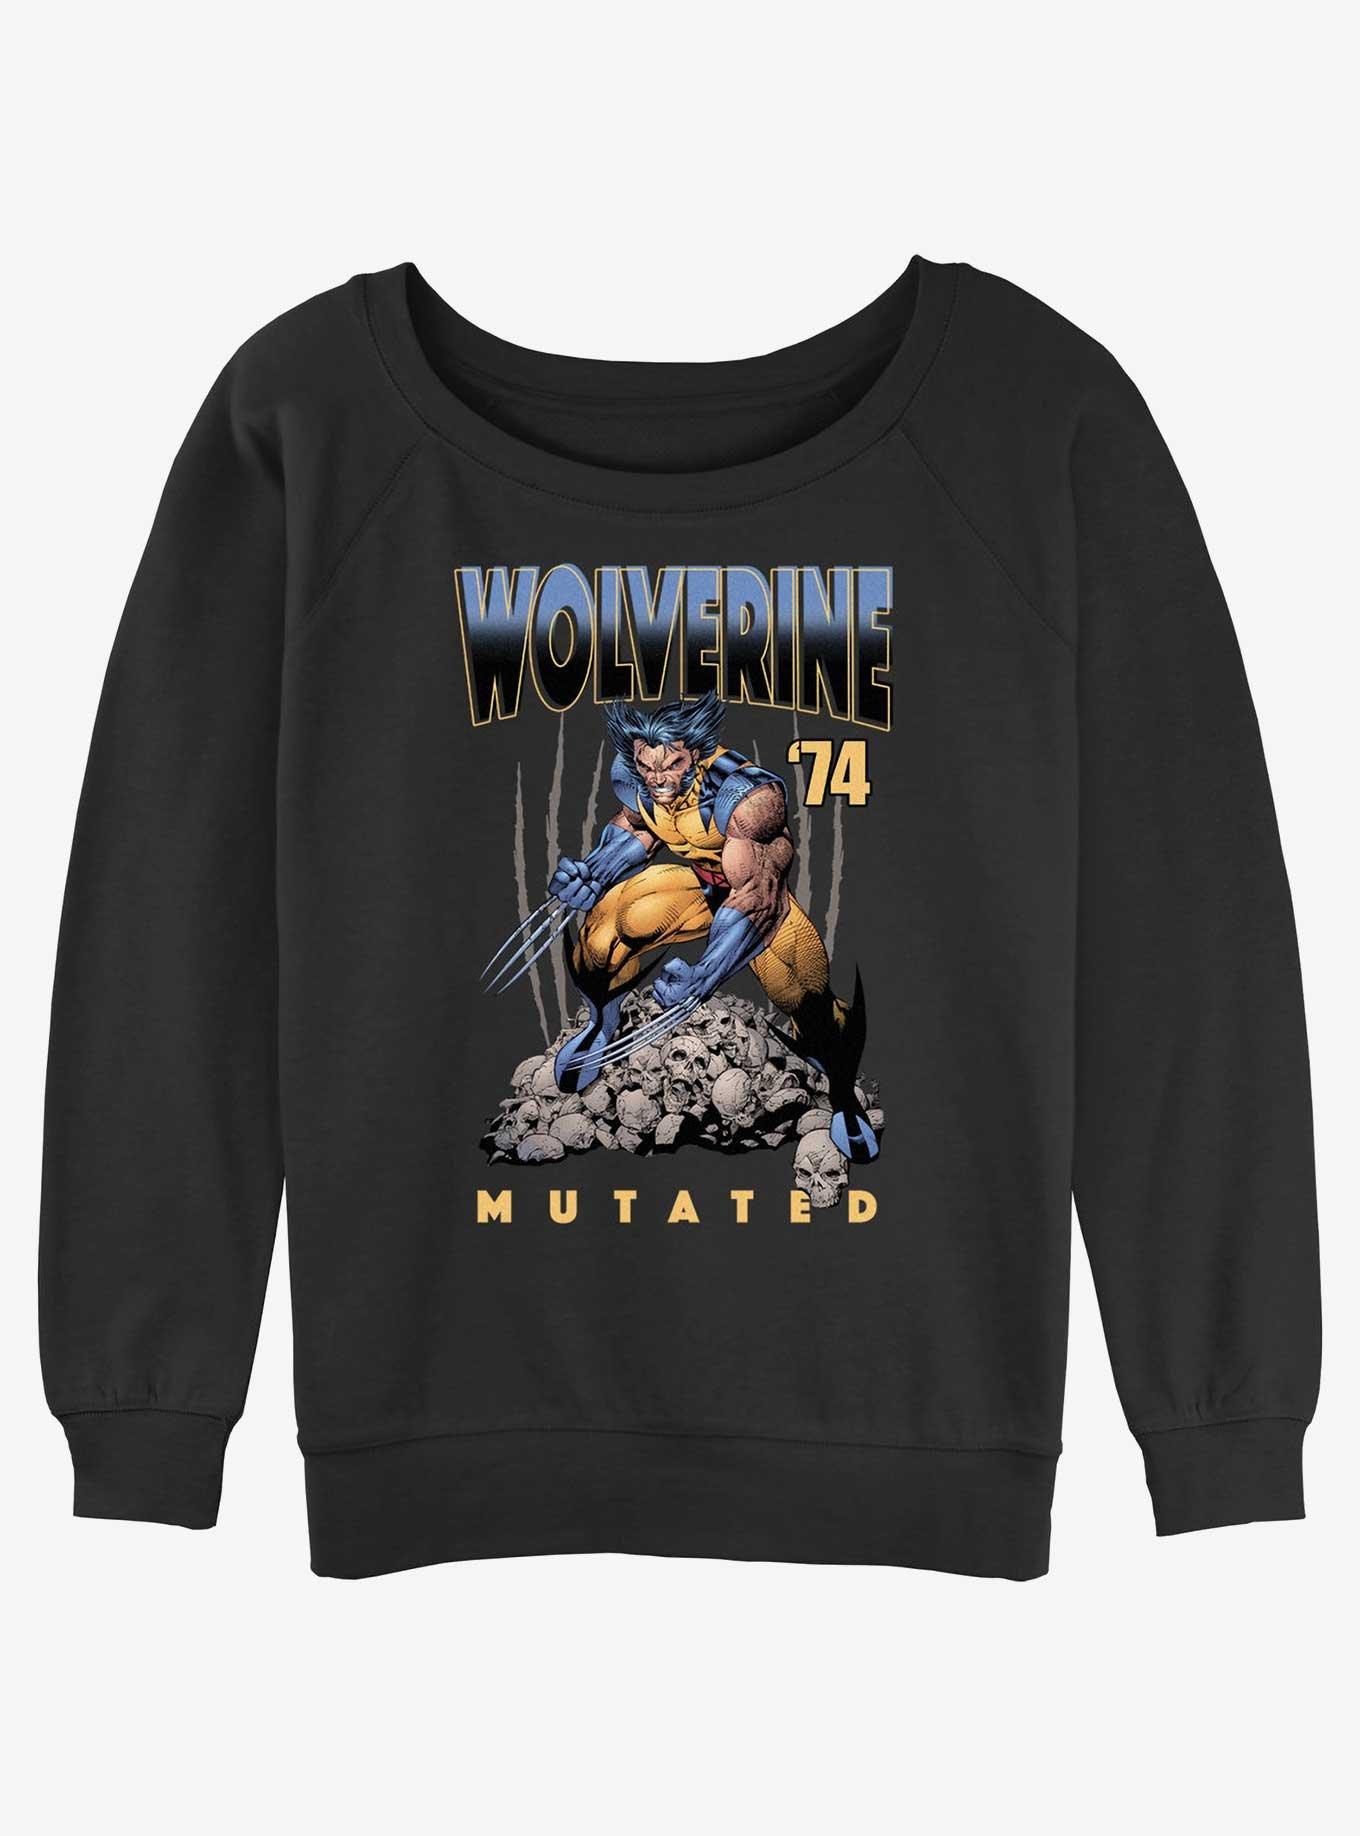 Wolverine Mutated Girls Slouchy Sweatshirt, BLACK, hi-res